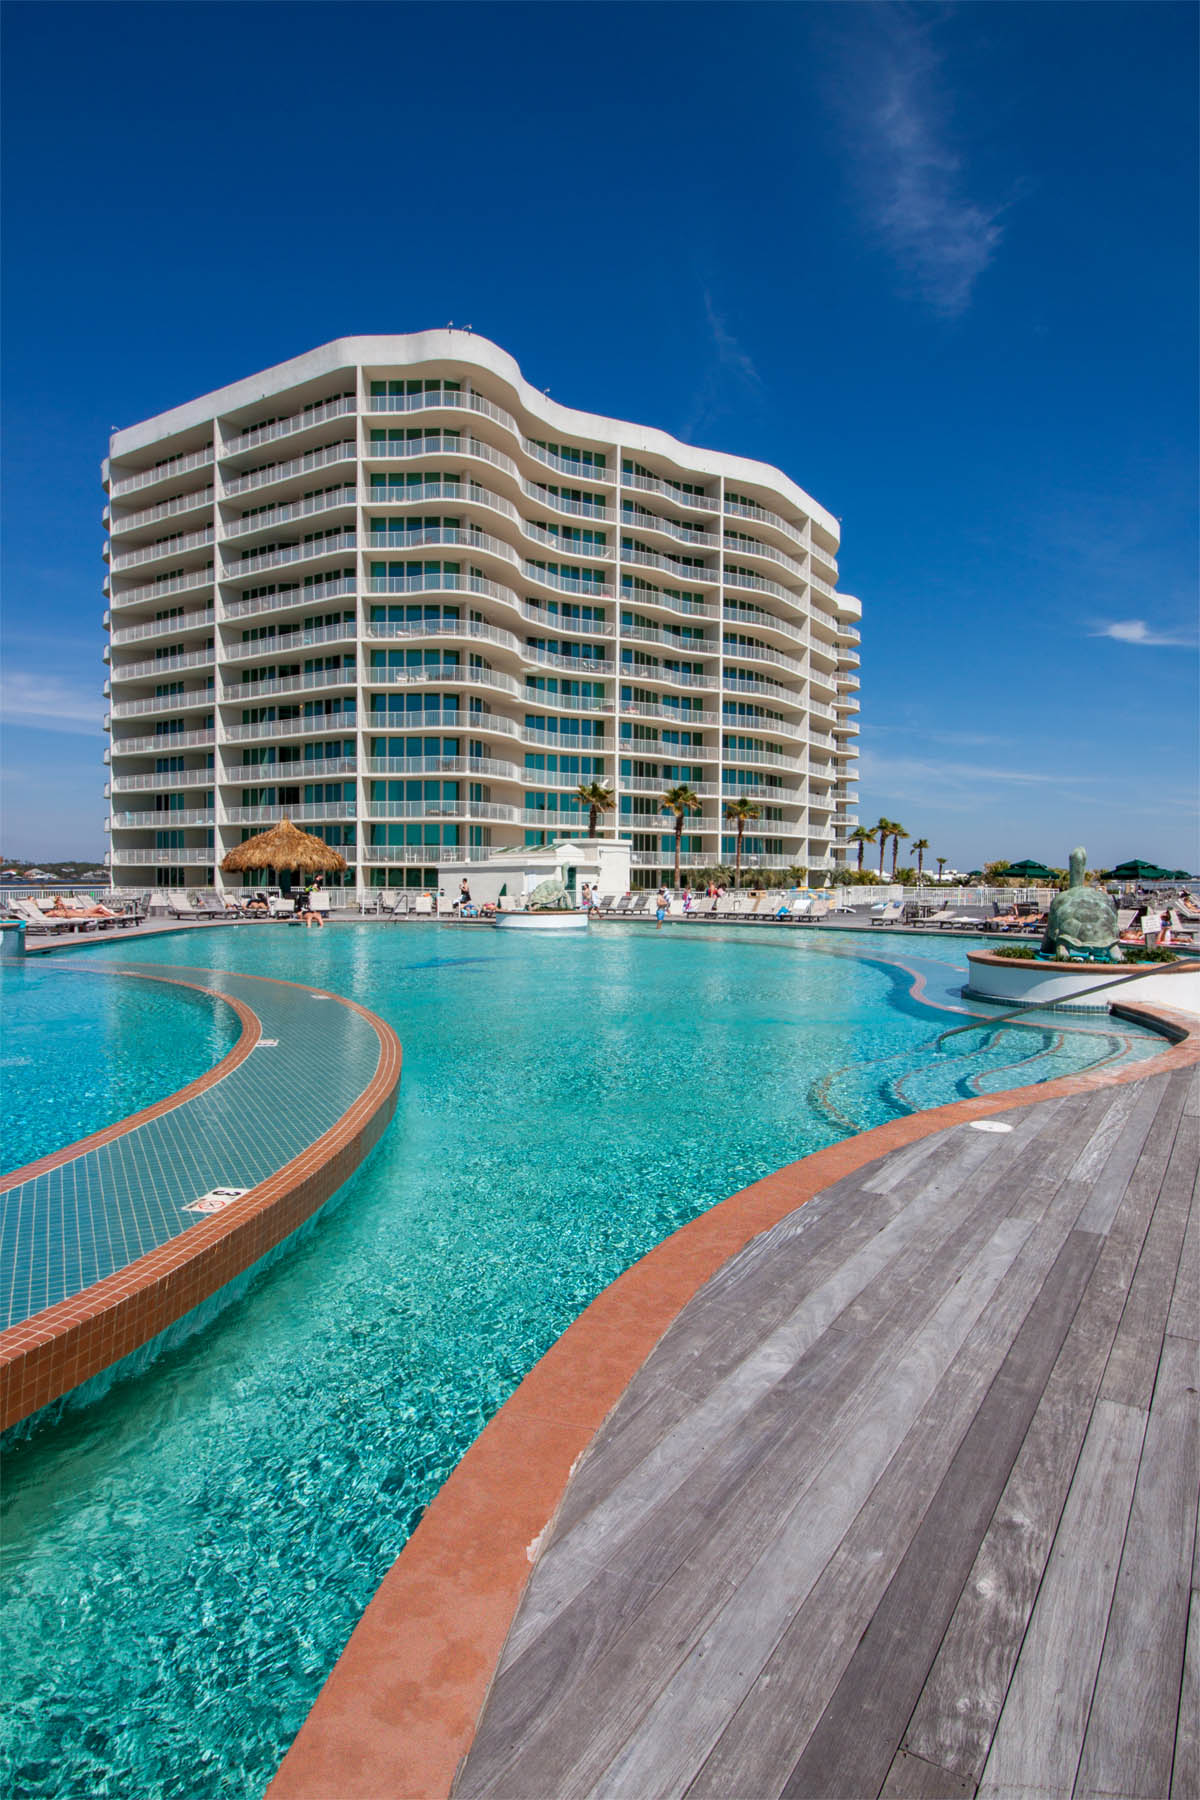 Caribe Resort Upper Deck View